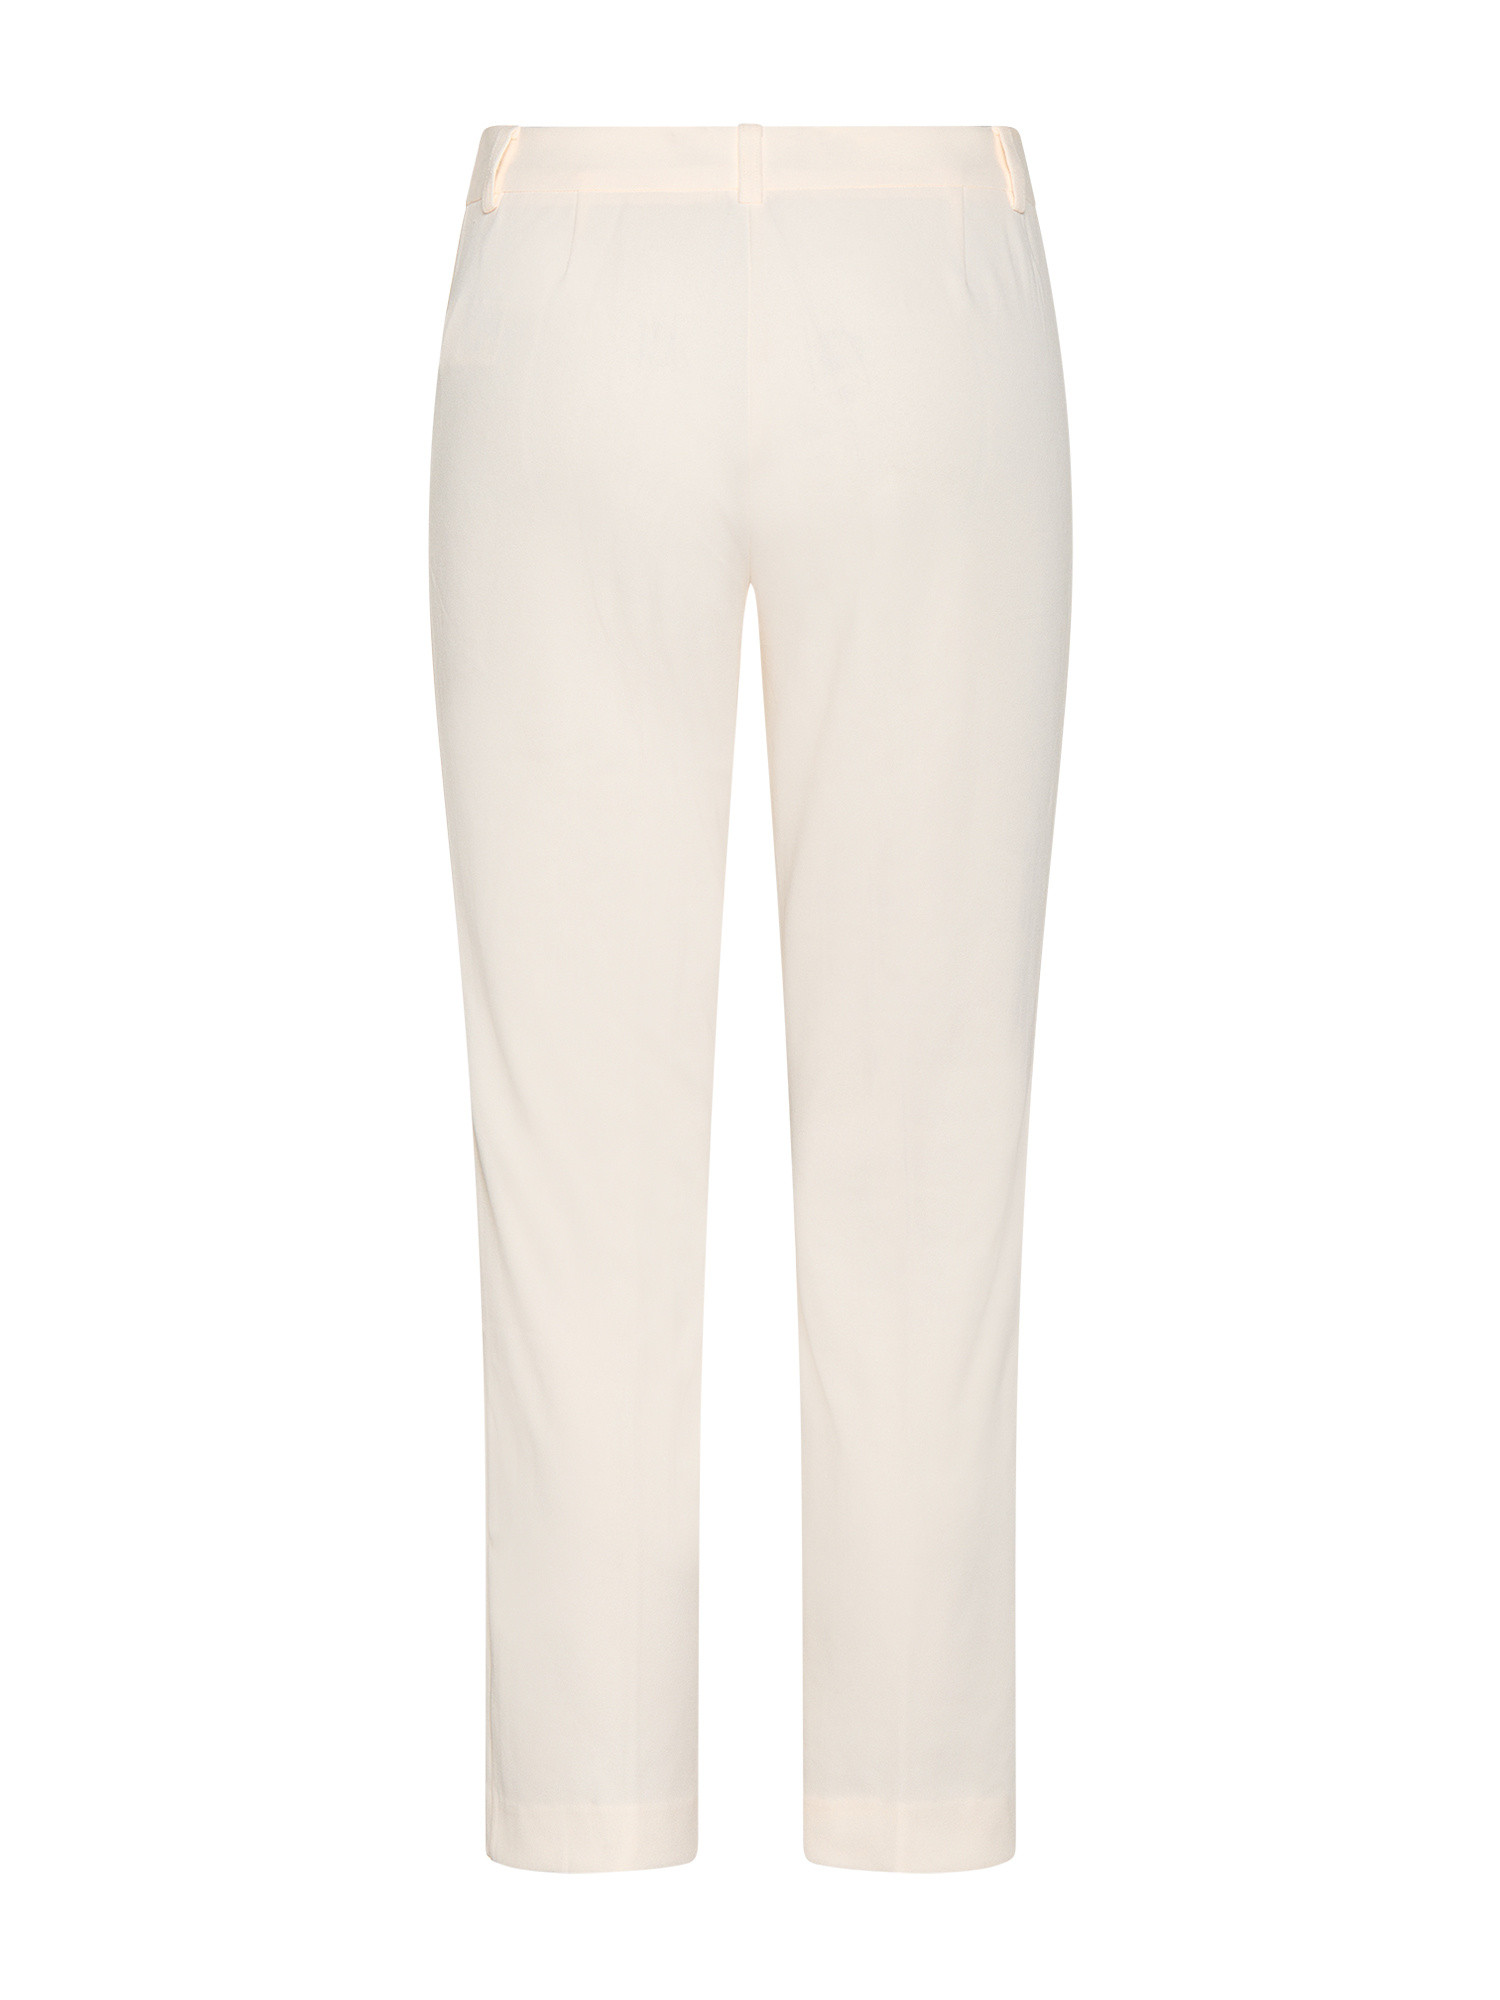 Koan - Pantaloni flare in crepe, Bianco panna, large image number 1